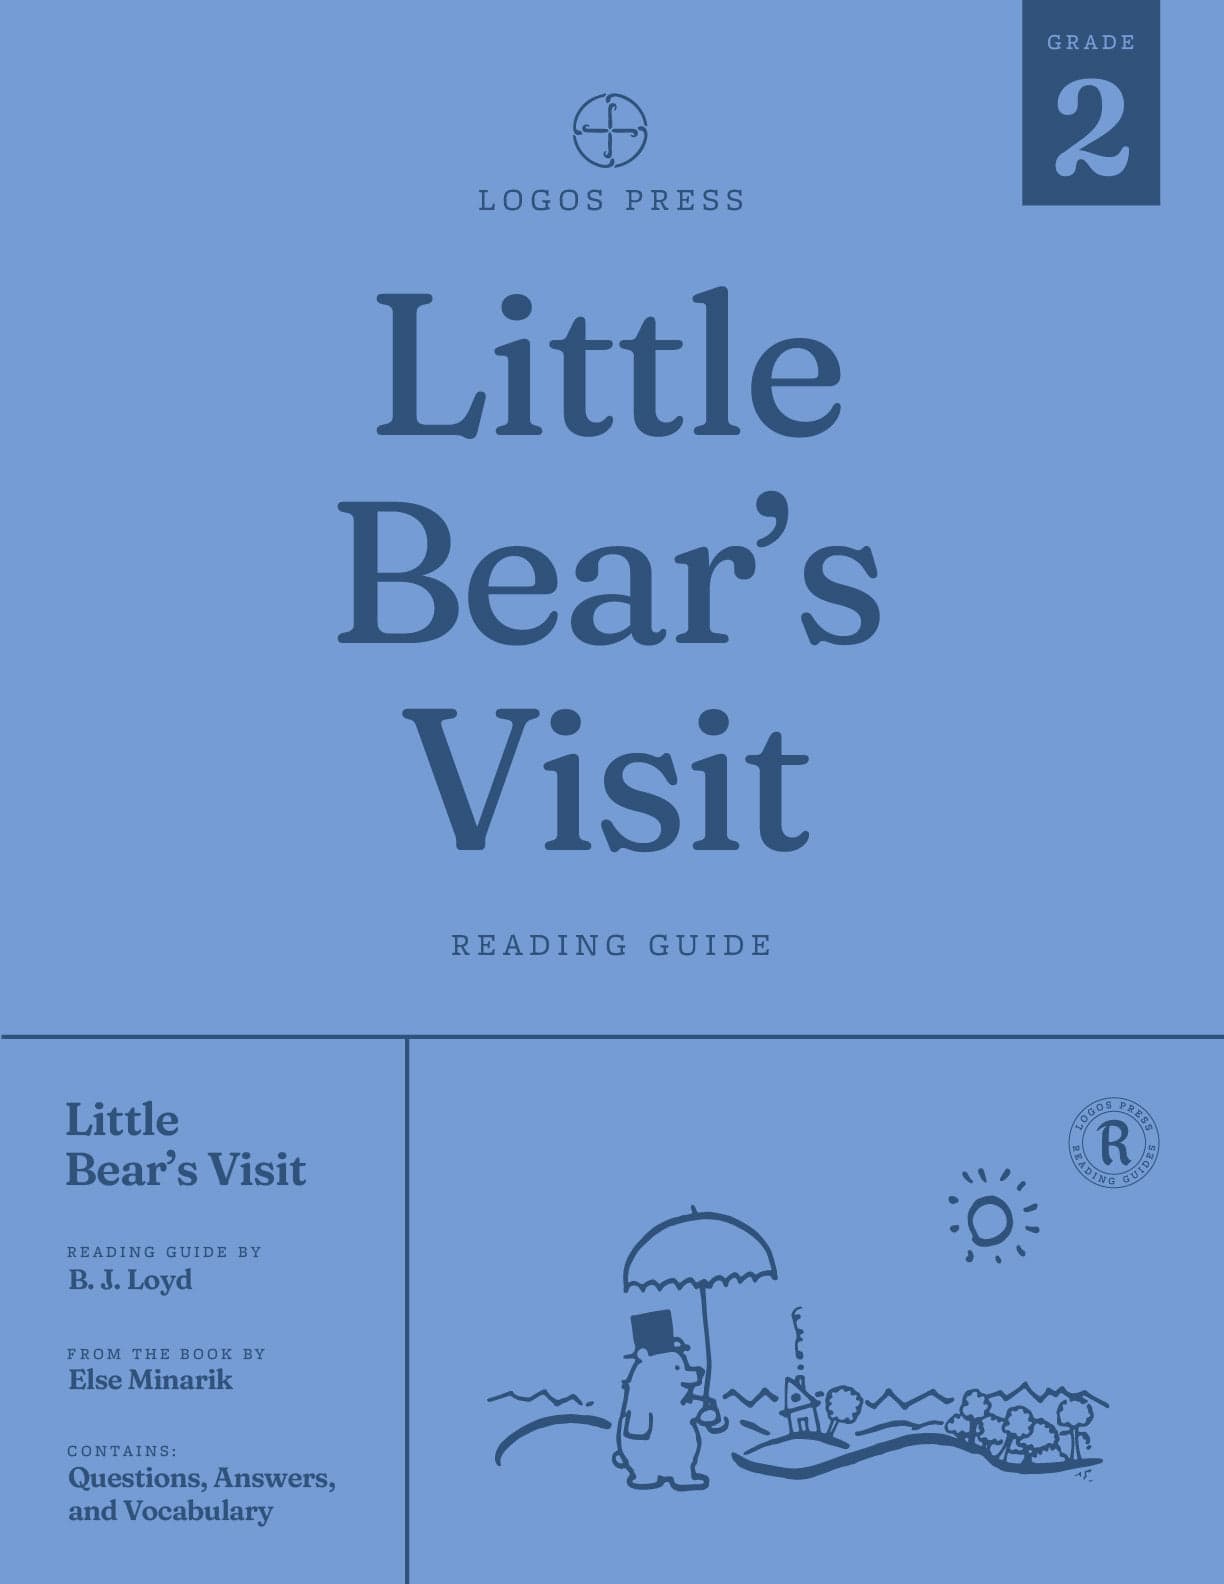 Little Bear's Visit - Reading Guide (Download)